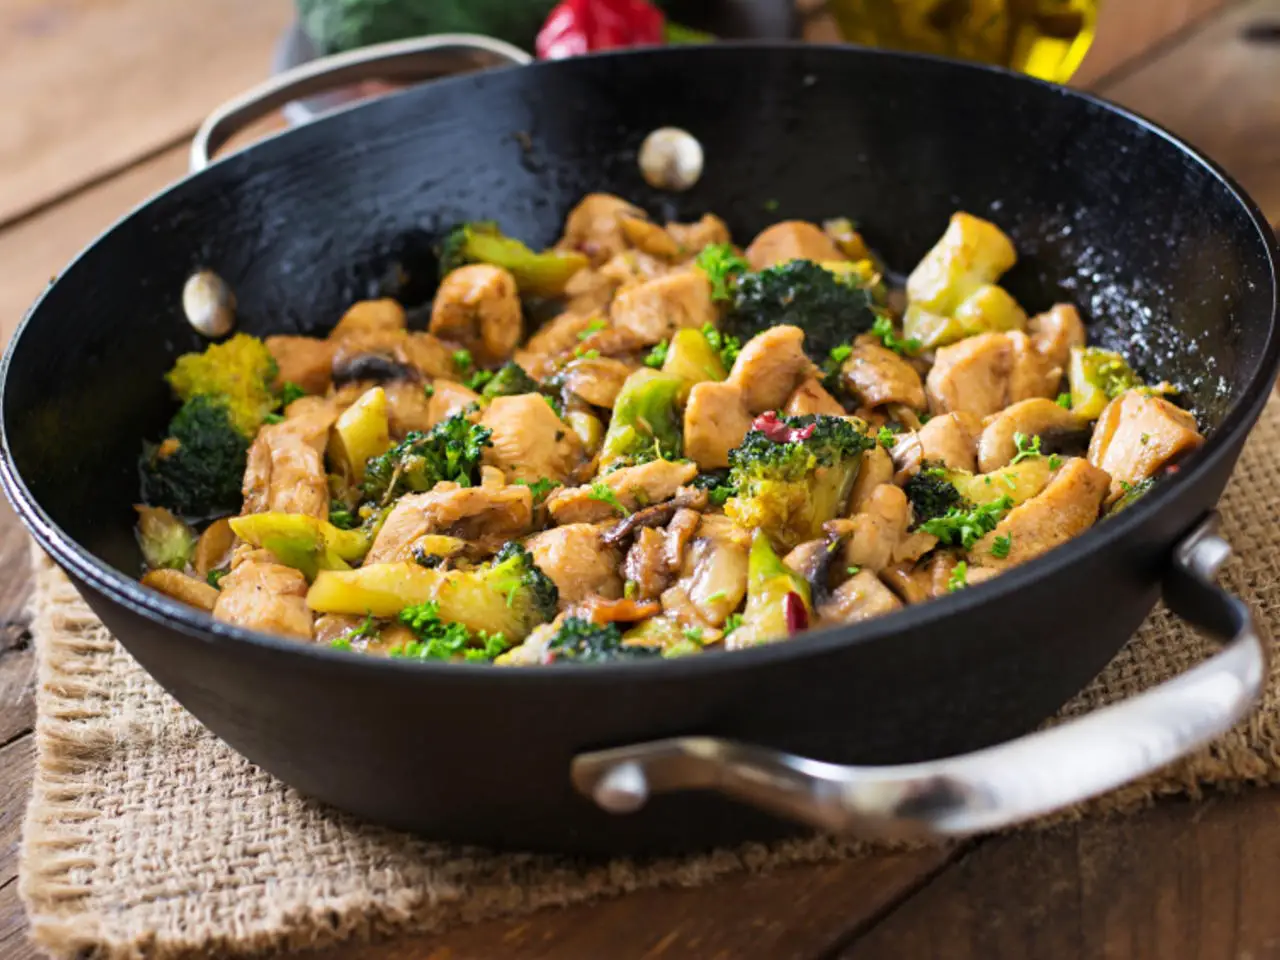 Deliciosa receta con pollo, exquisito wok de pollo